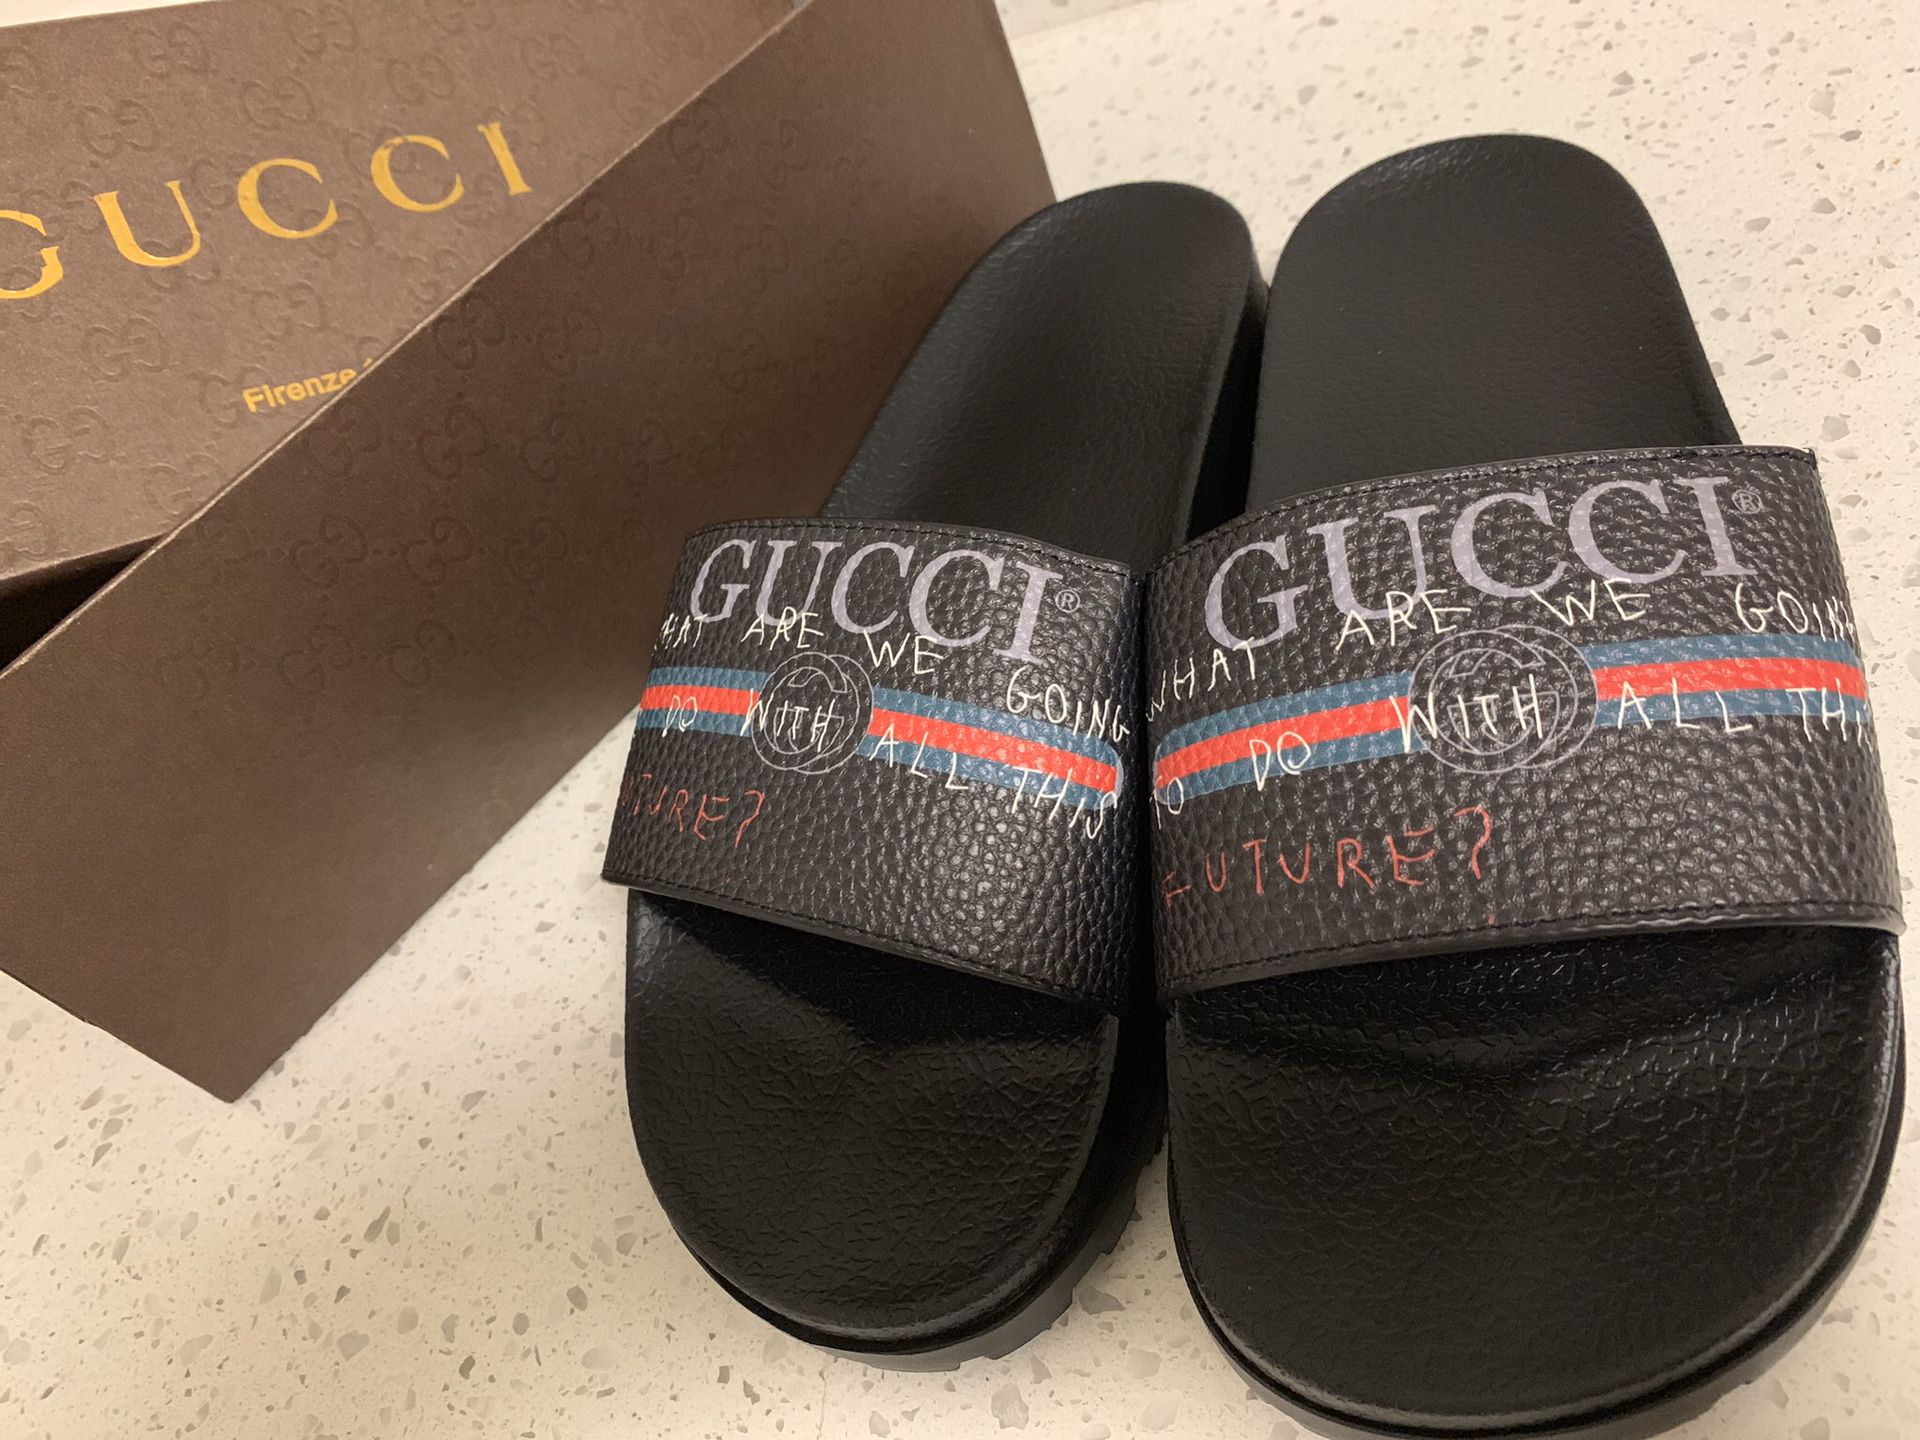 Gucci slides size 11